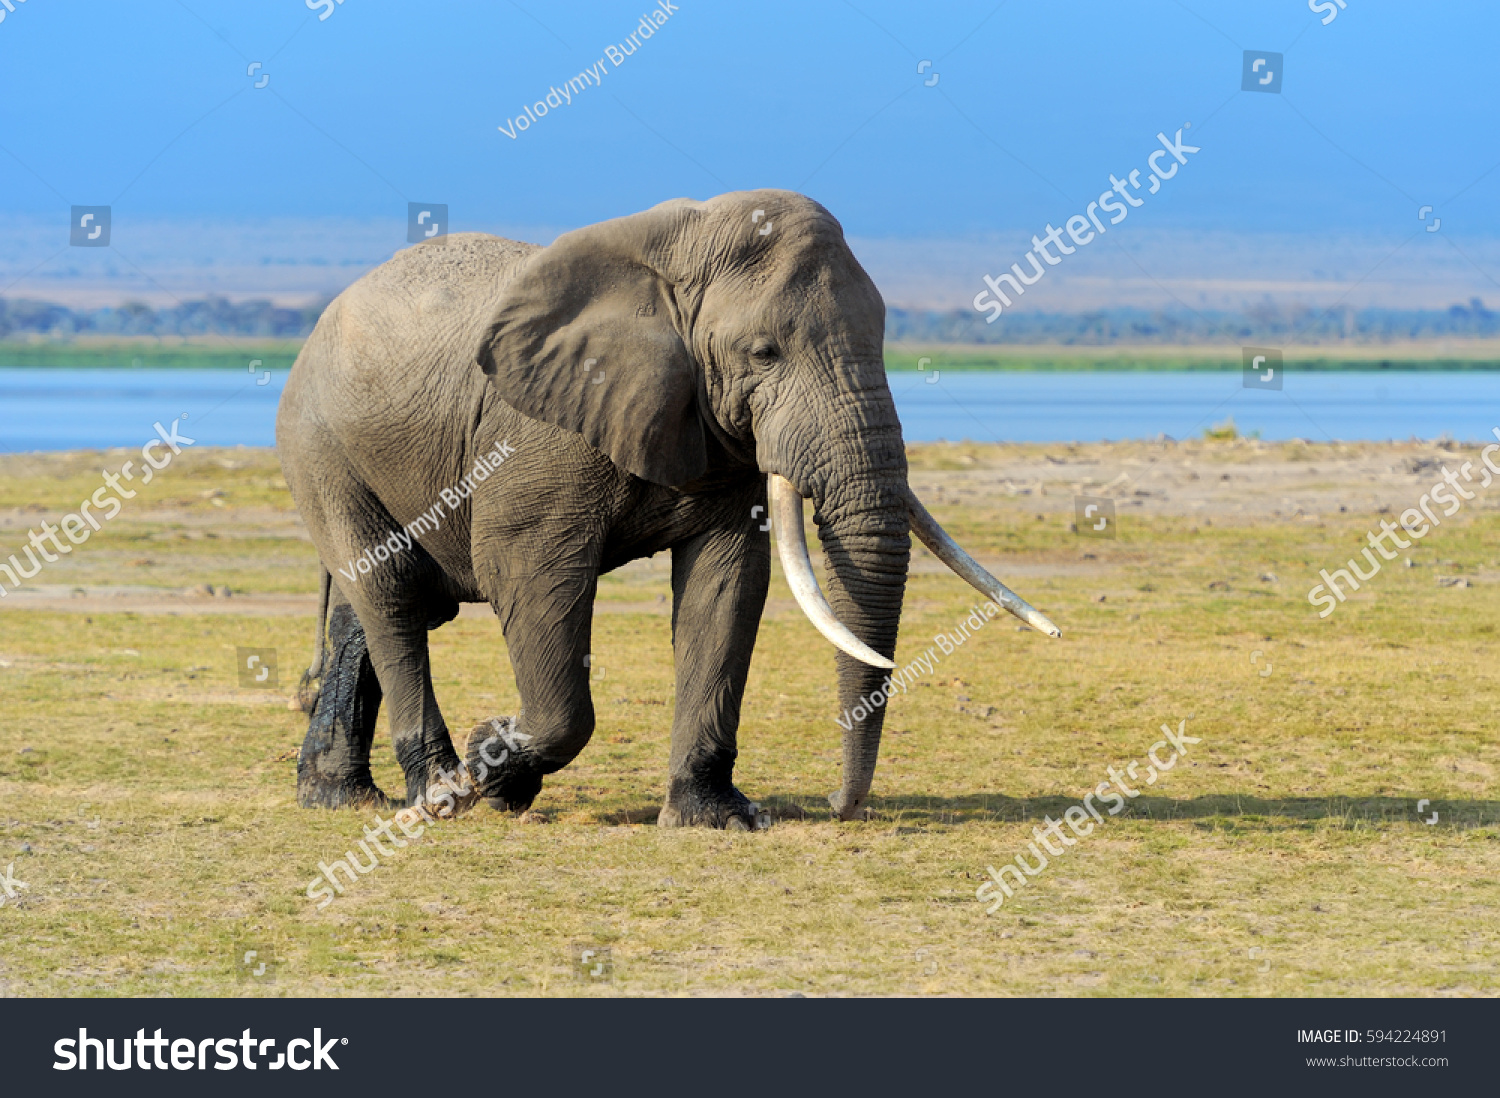 Elephant in National park of Kenya, Africa #594224891